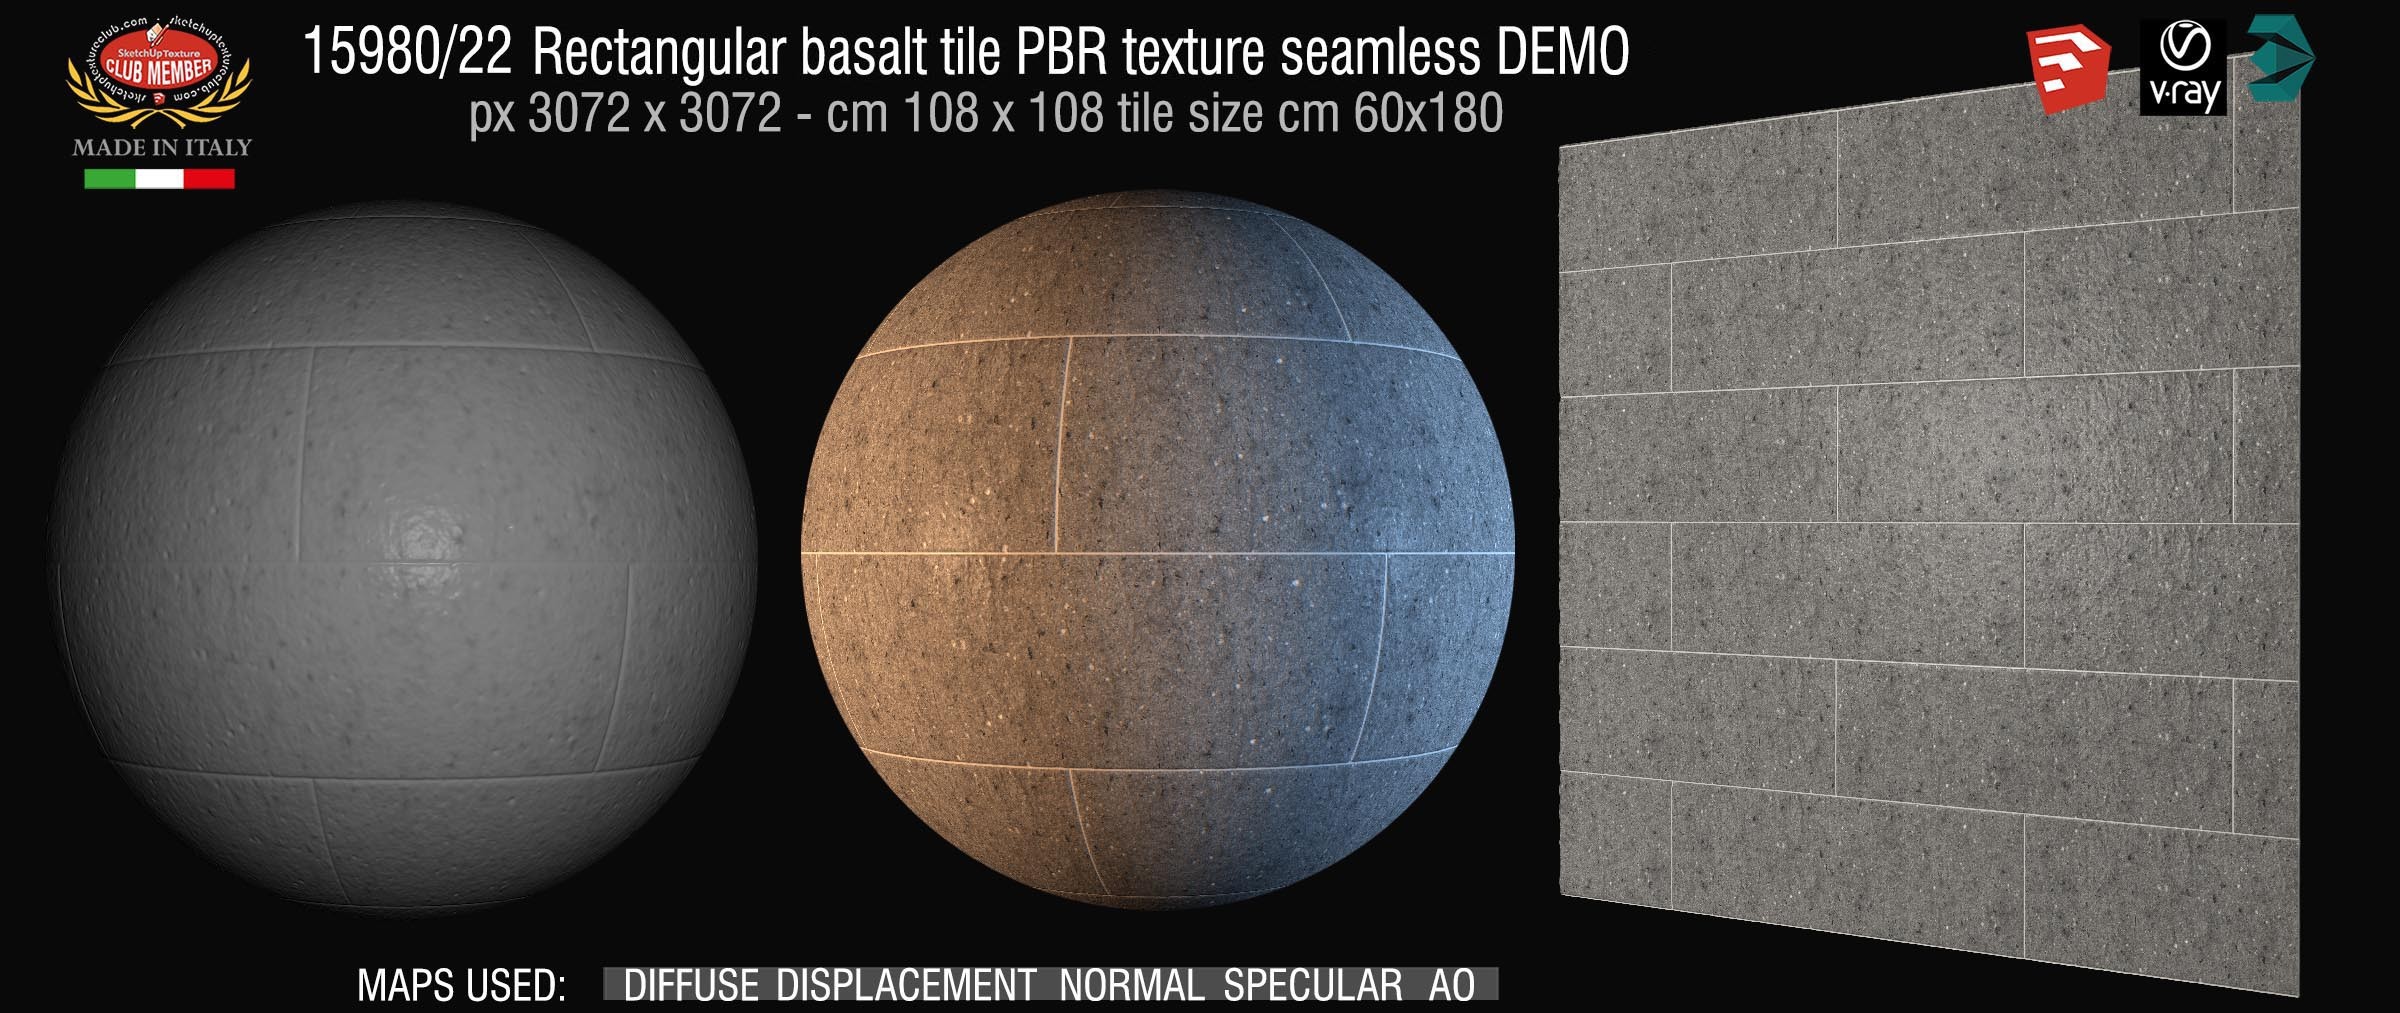 15979_21 Rectangular basalt tile PBR texture seamless DEMO